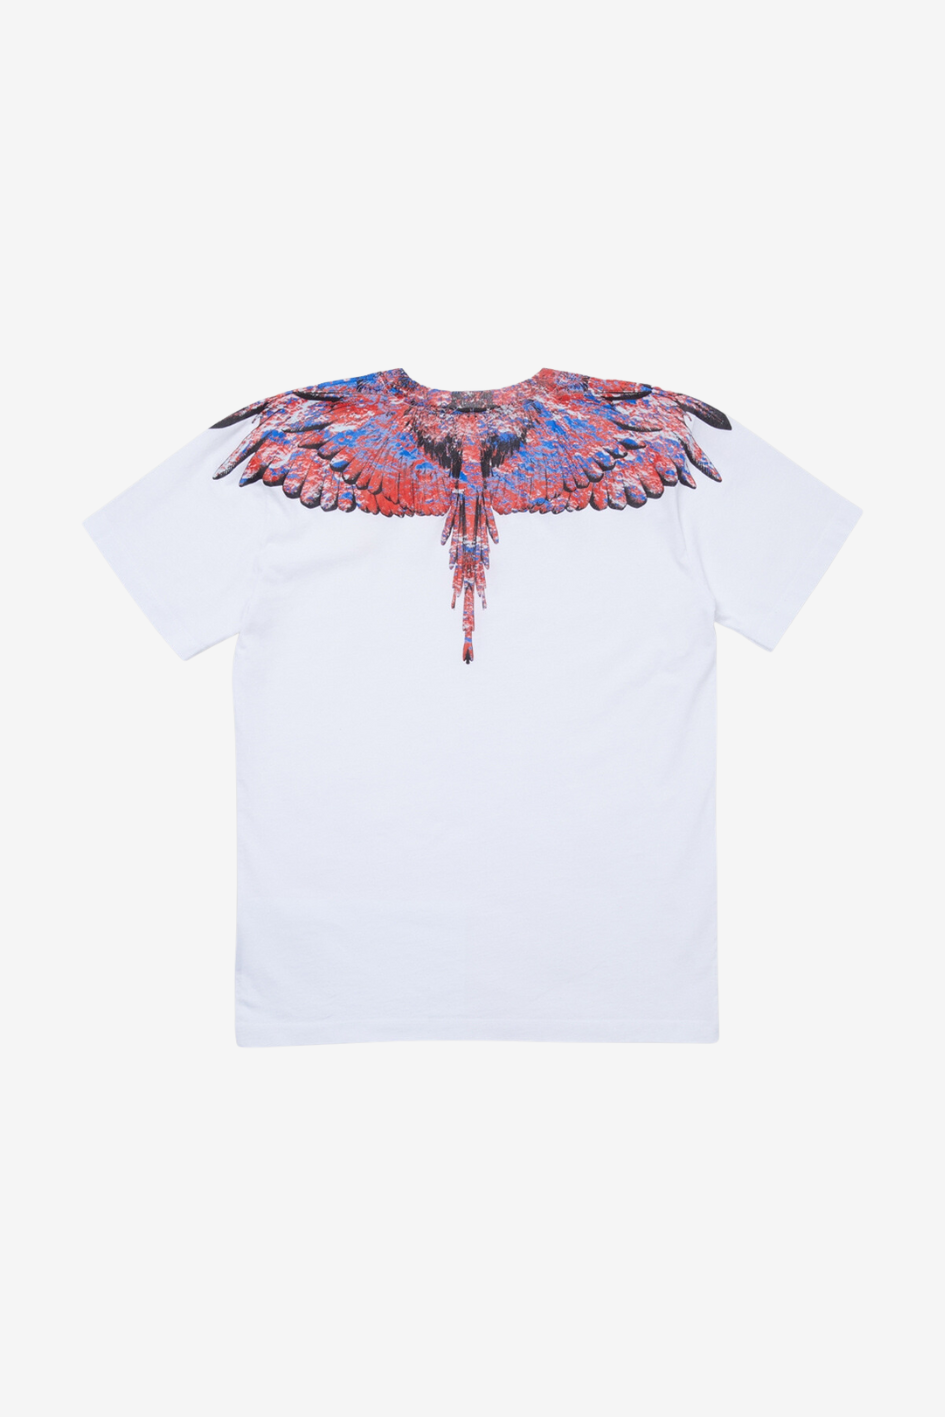 Lunar Wings Regular T-Shirt